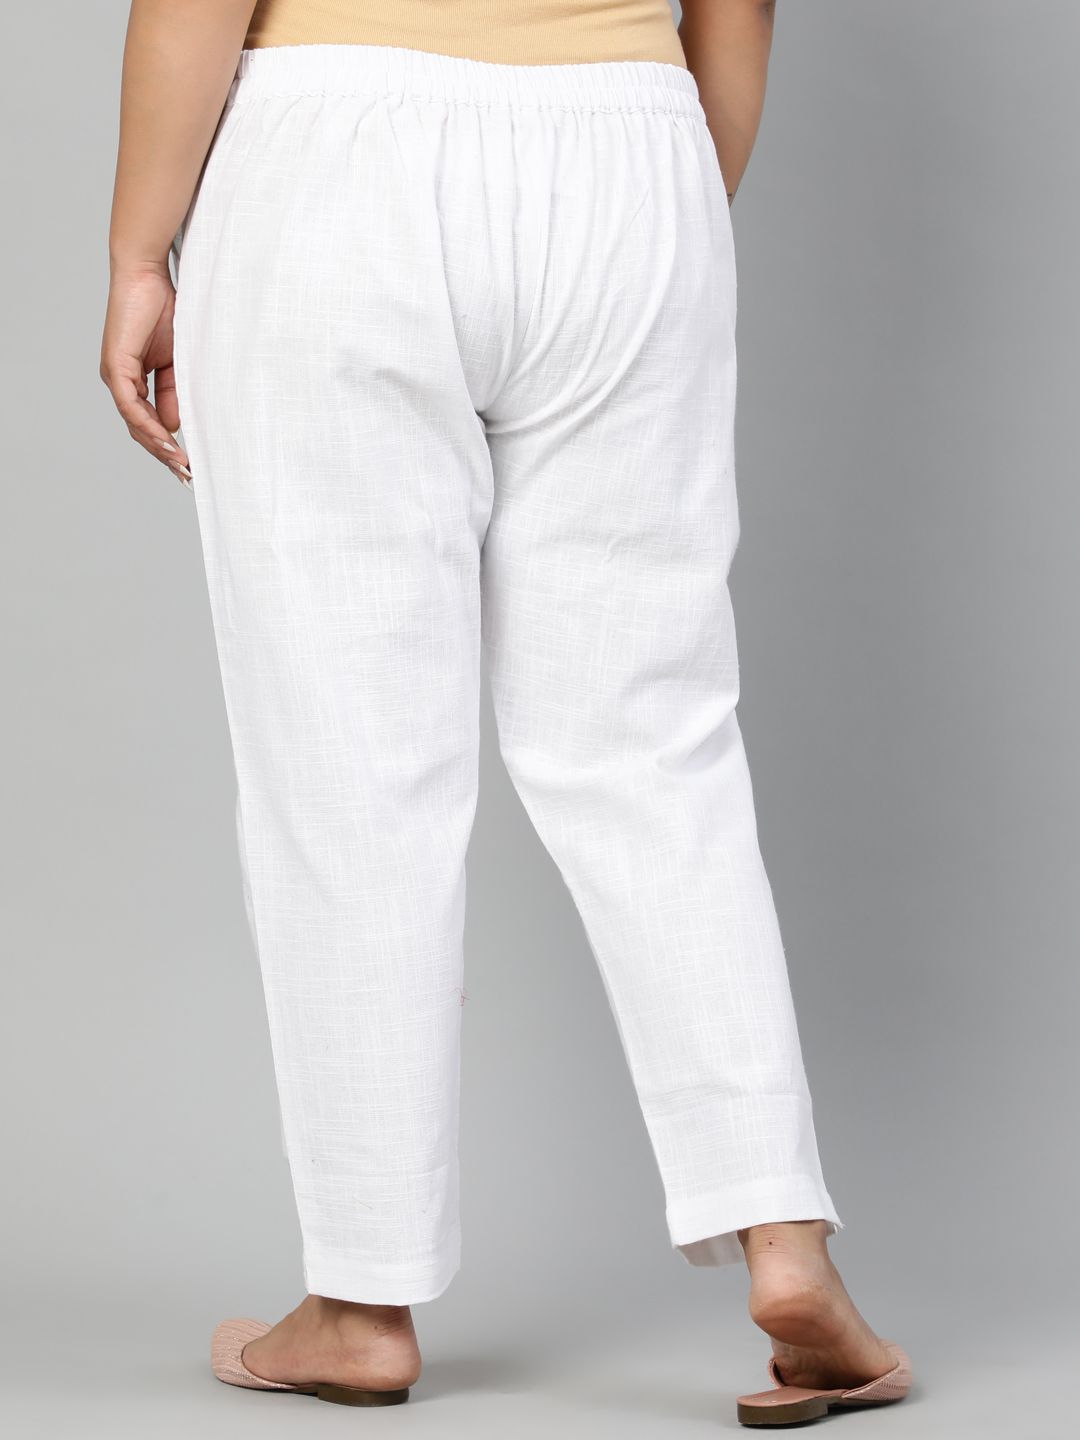 Buy women's casual pants with elastic waist